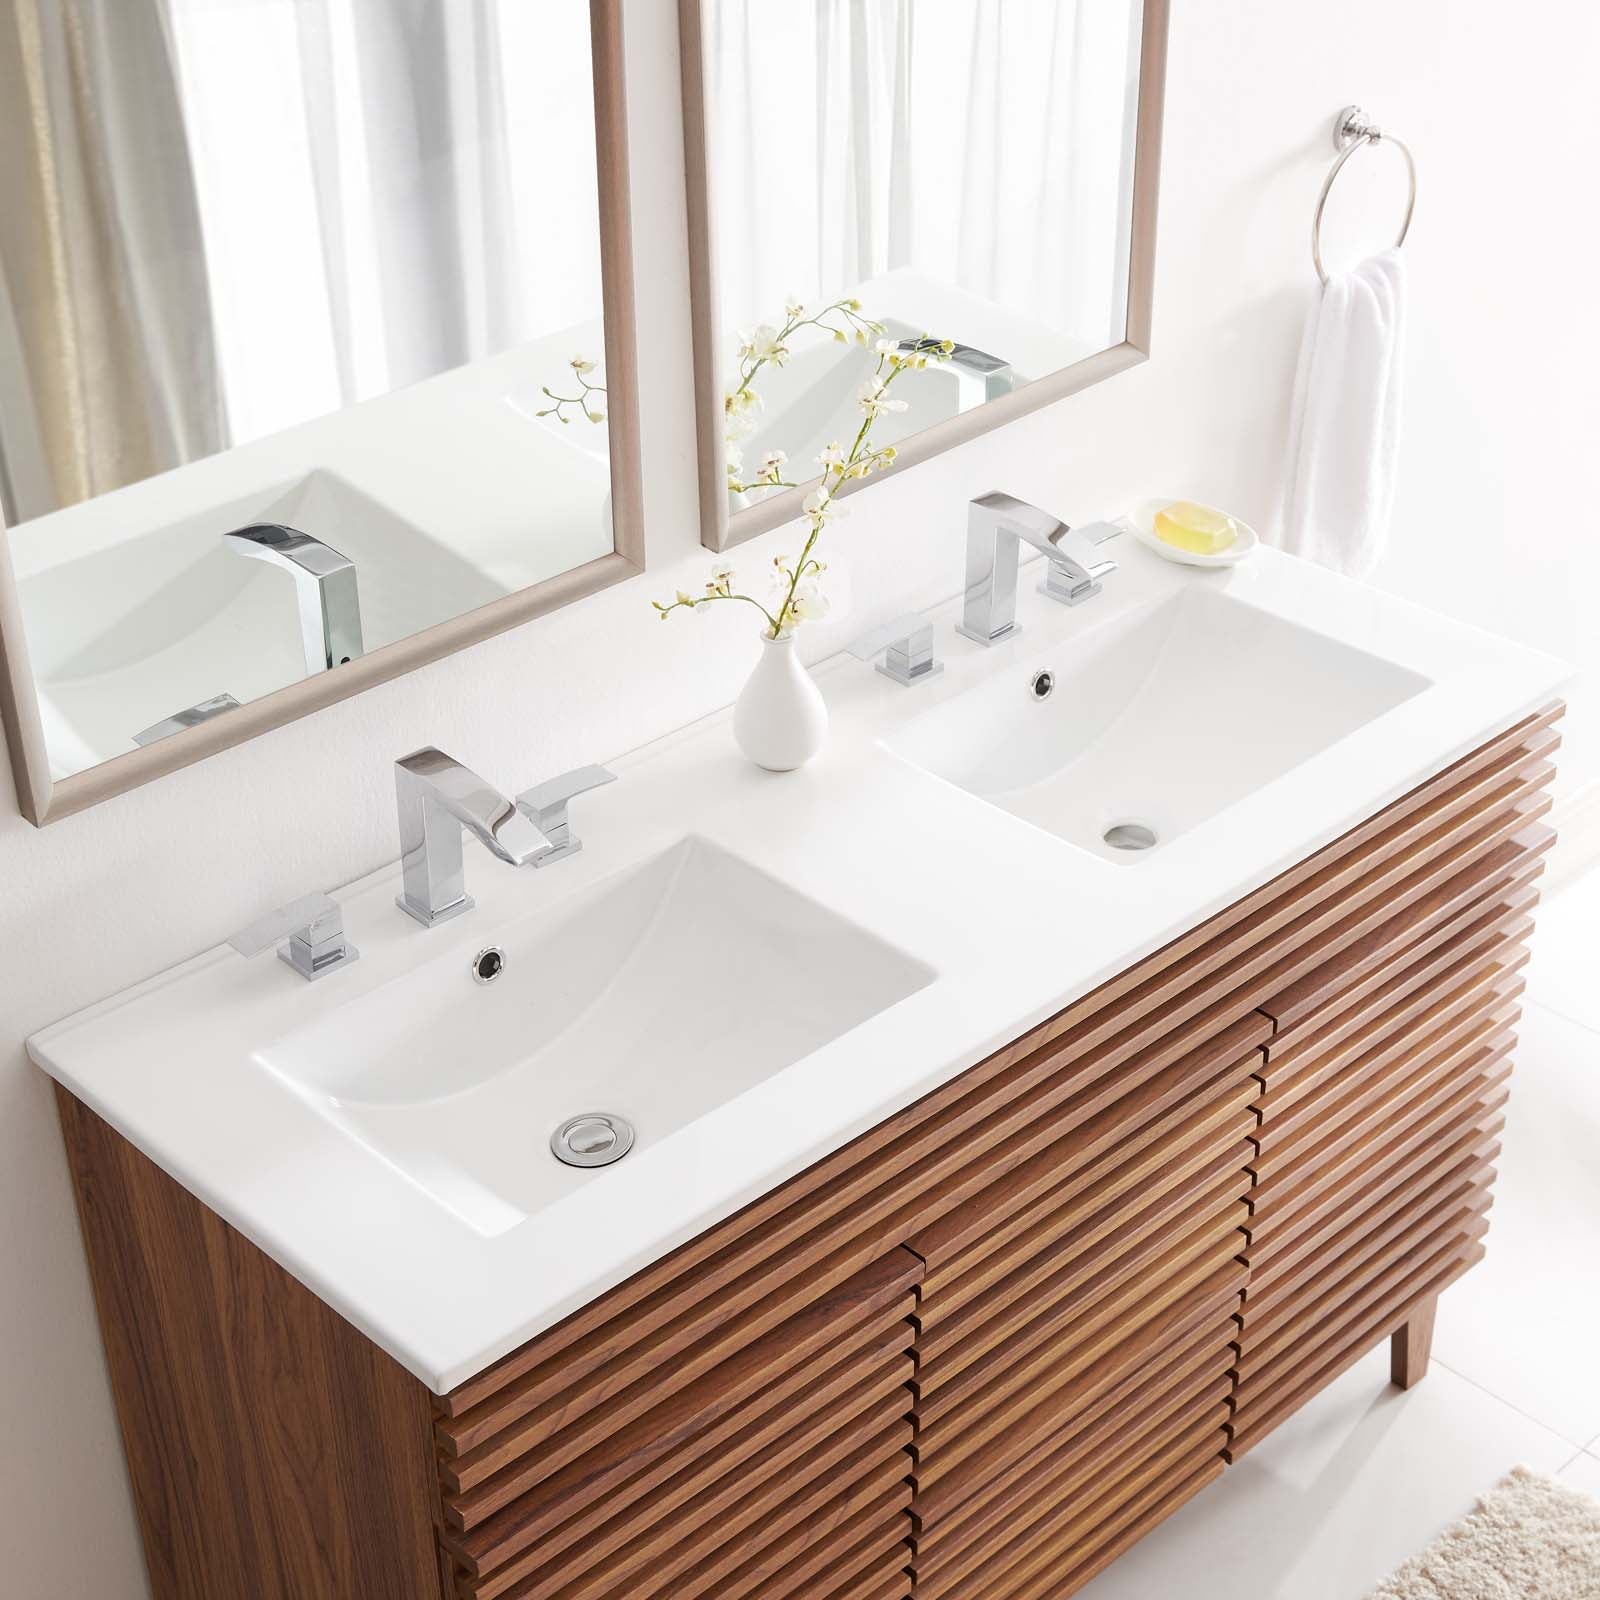 Cayman 48" Double Basin Bathroom Sink - East Shore Modern Home Furnishings